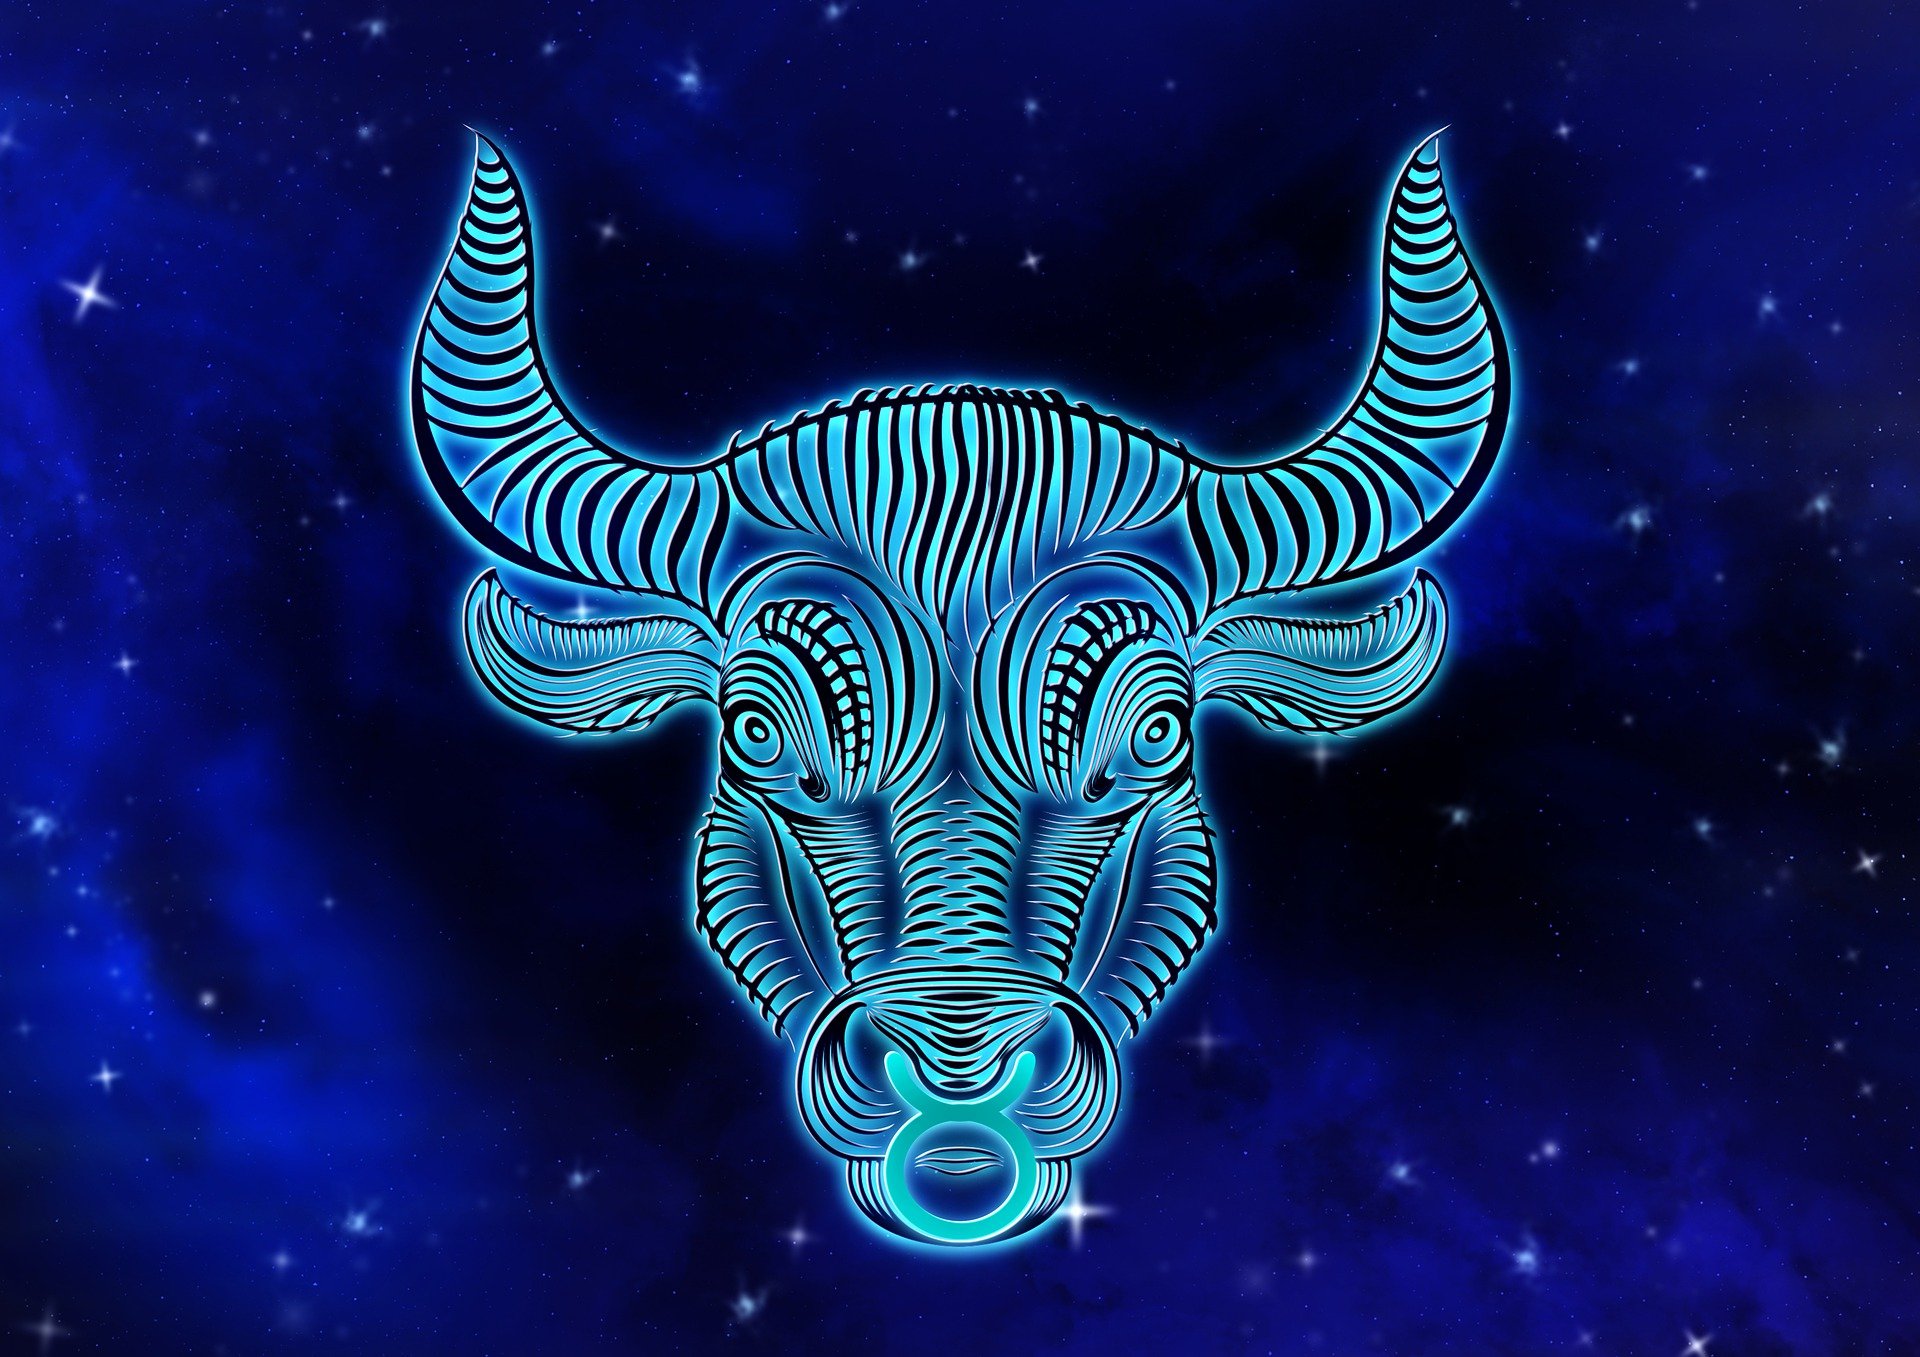 An illustration of a Taurus star sign | Photo: Pixabay 